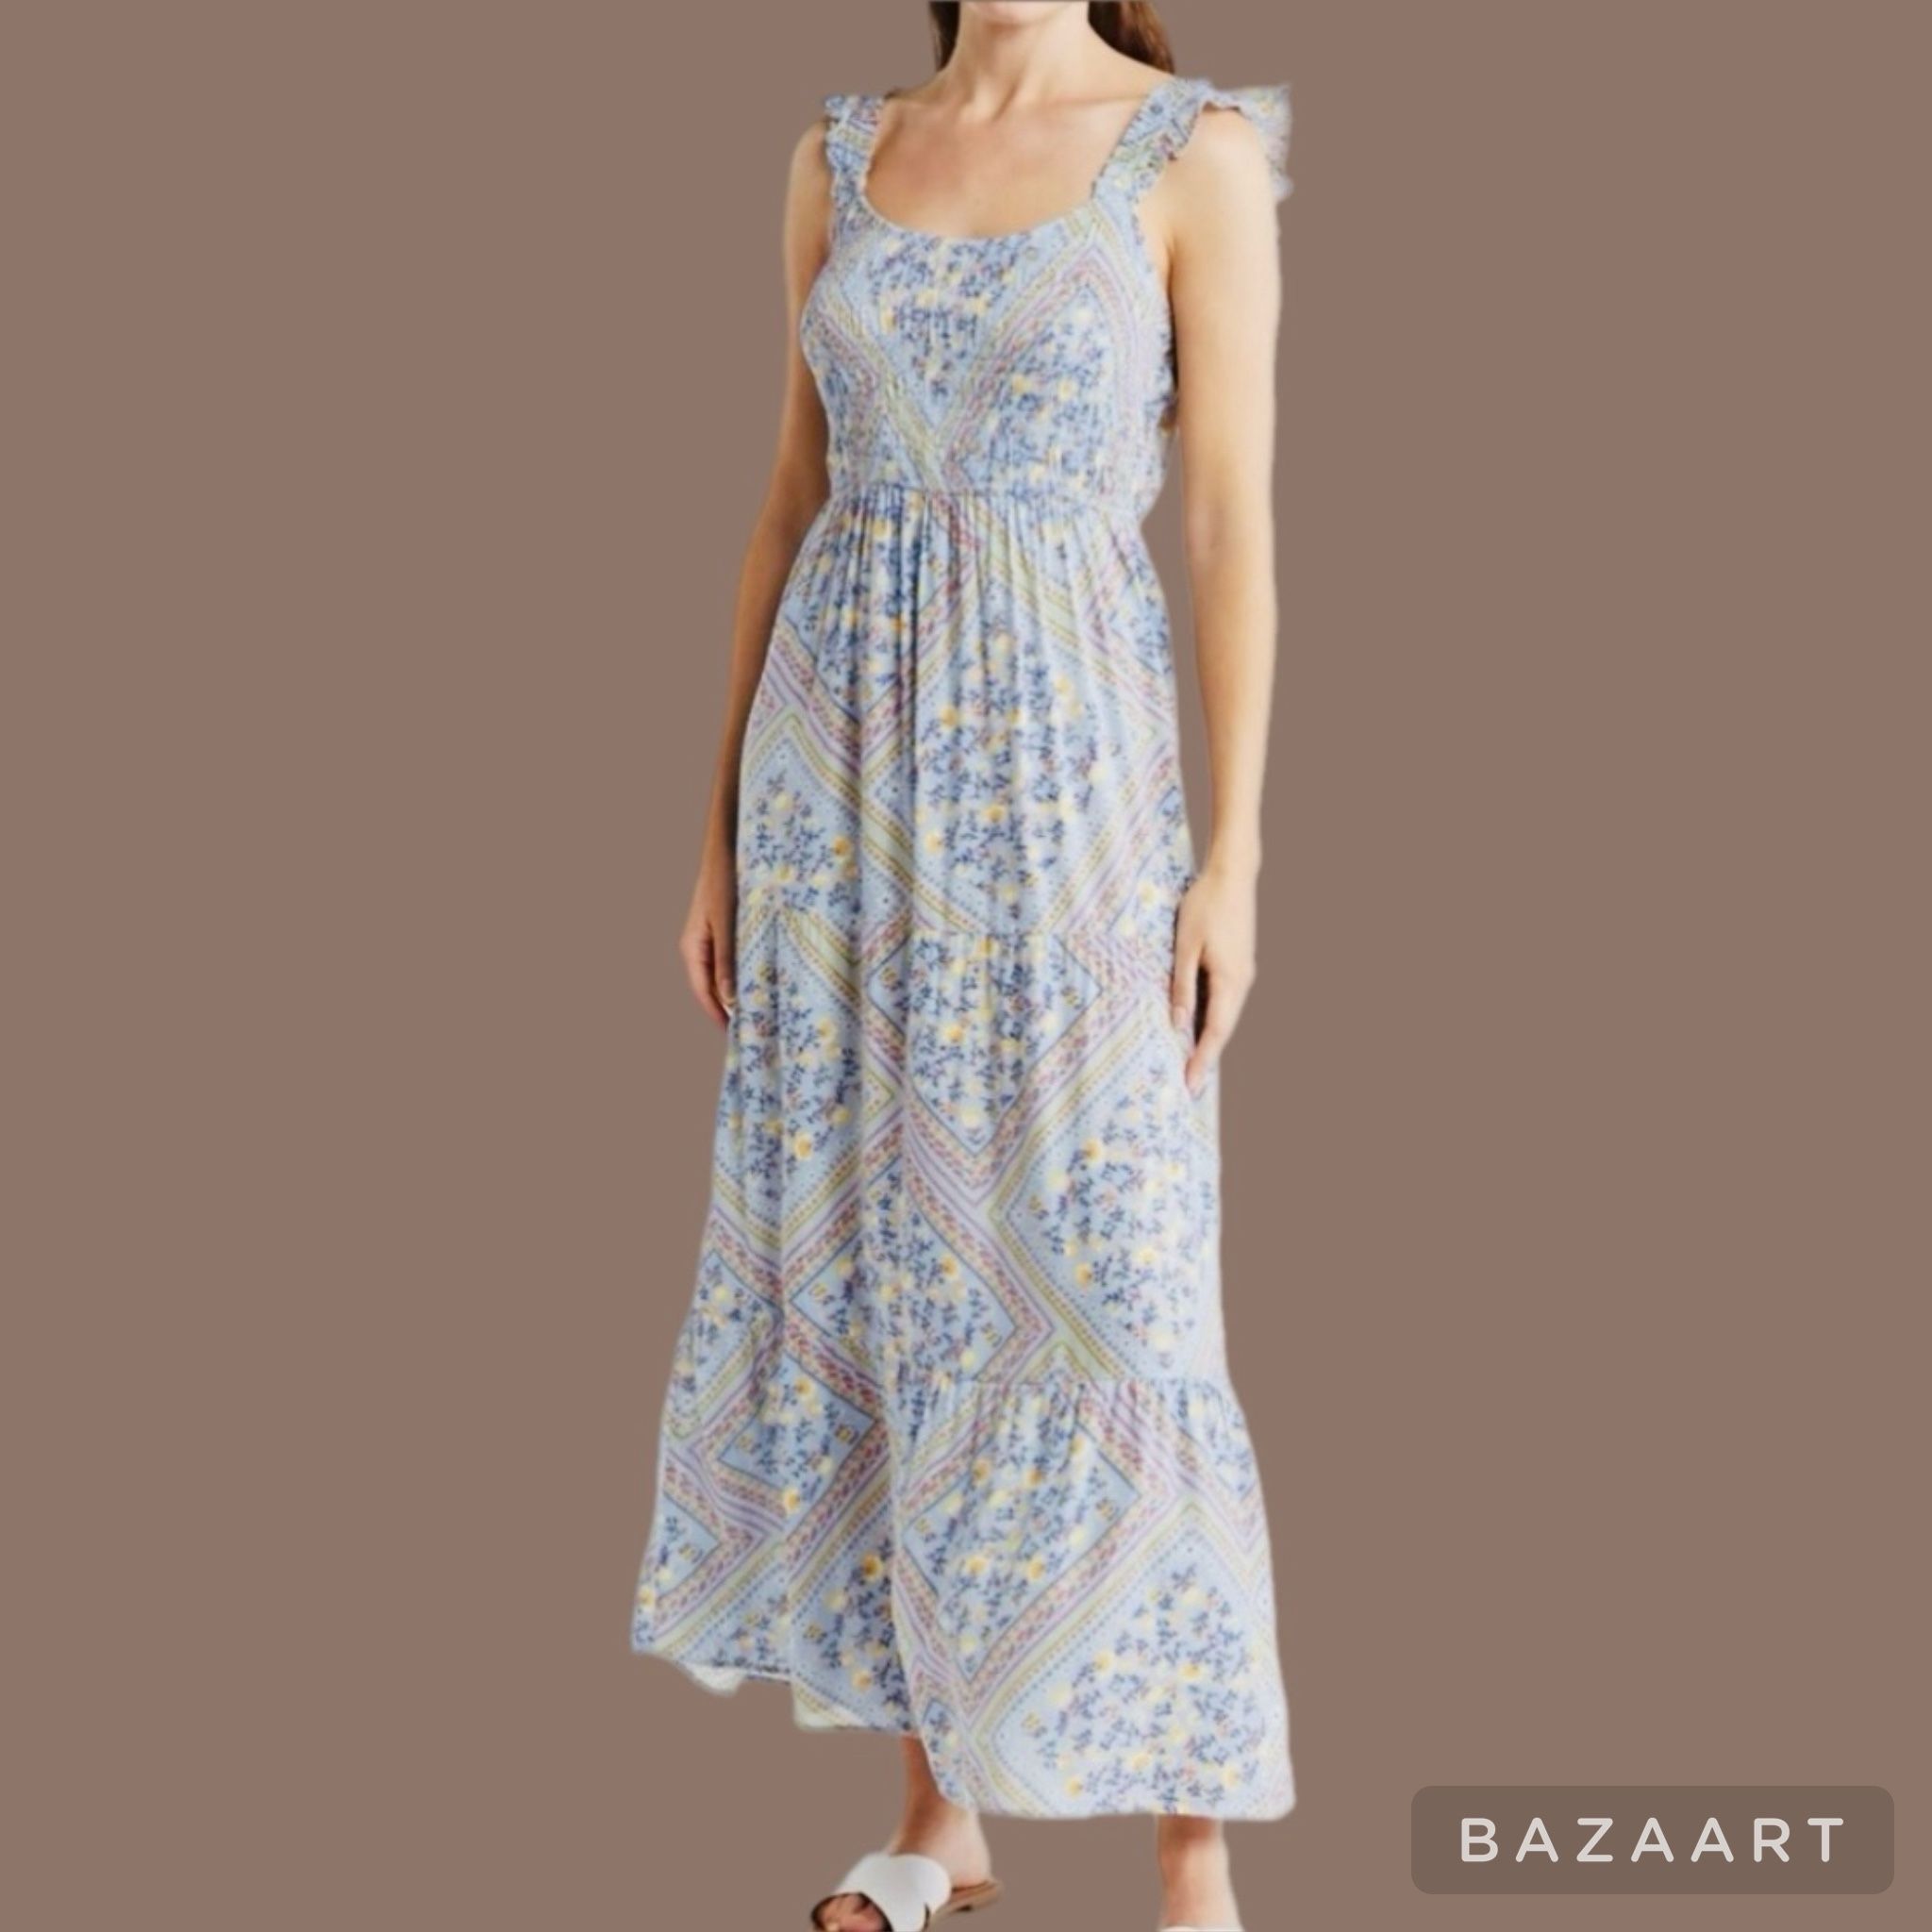 SZ 2X NWT boho Blue Print Butterfly-Sleeve Floral Print Dress DEREK HEART